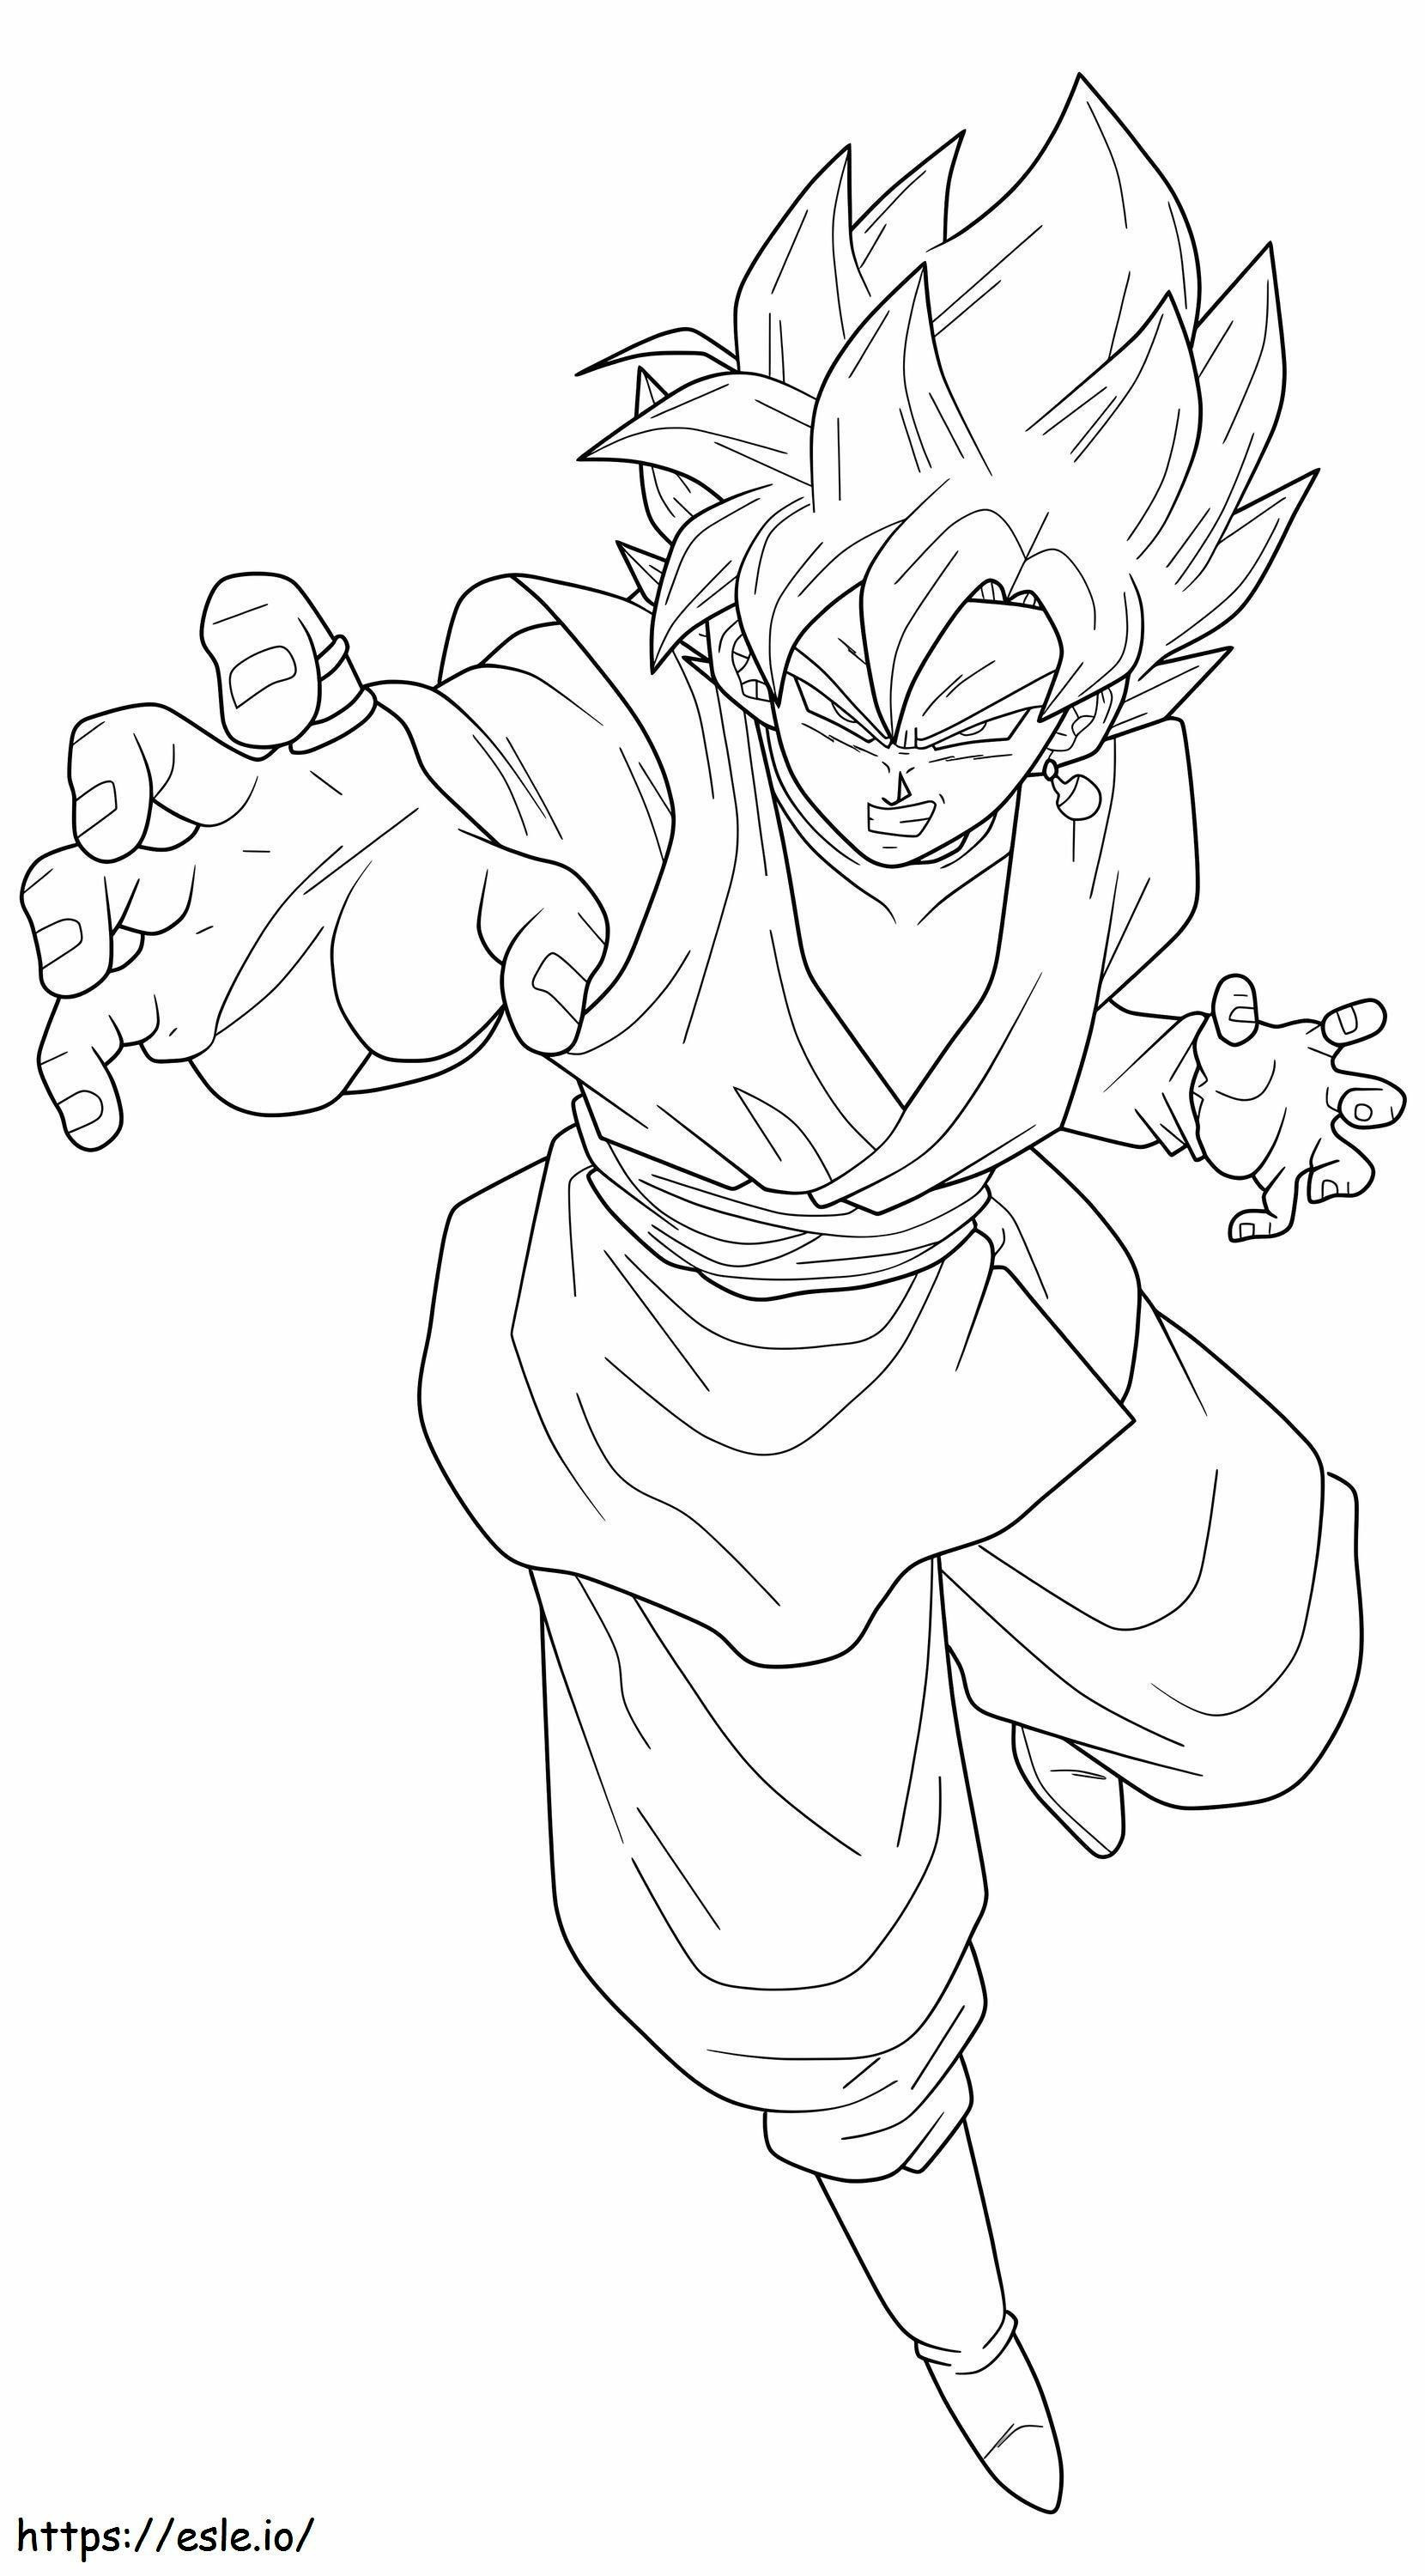 Black Goku Attack coloring page